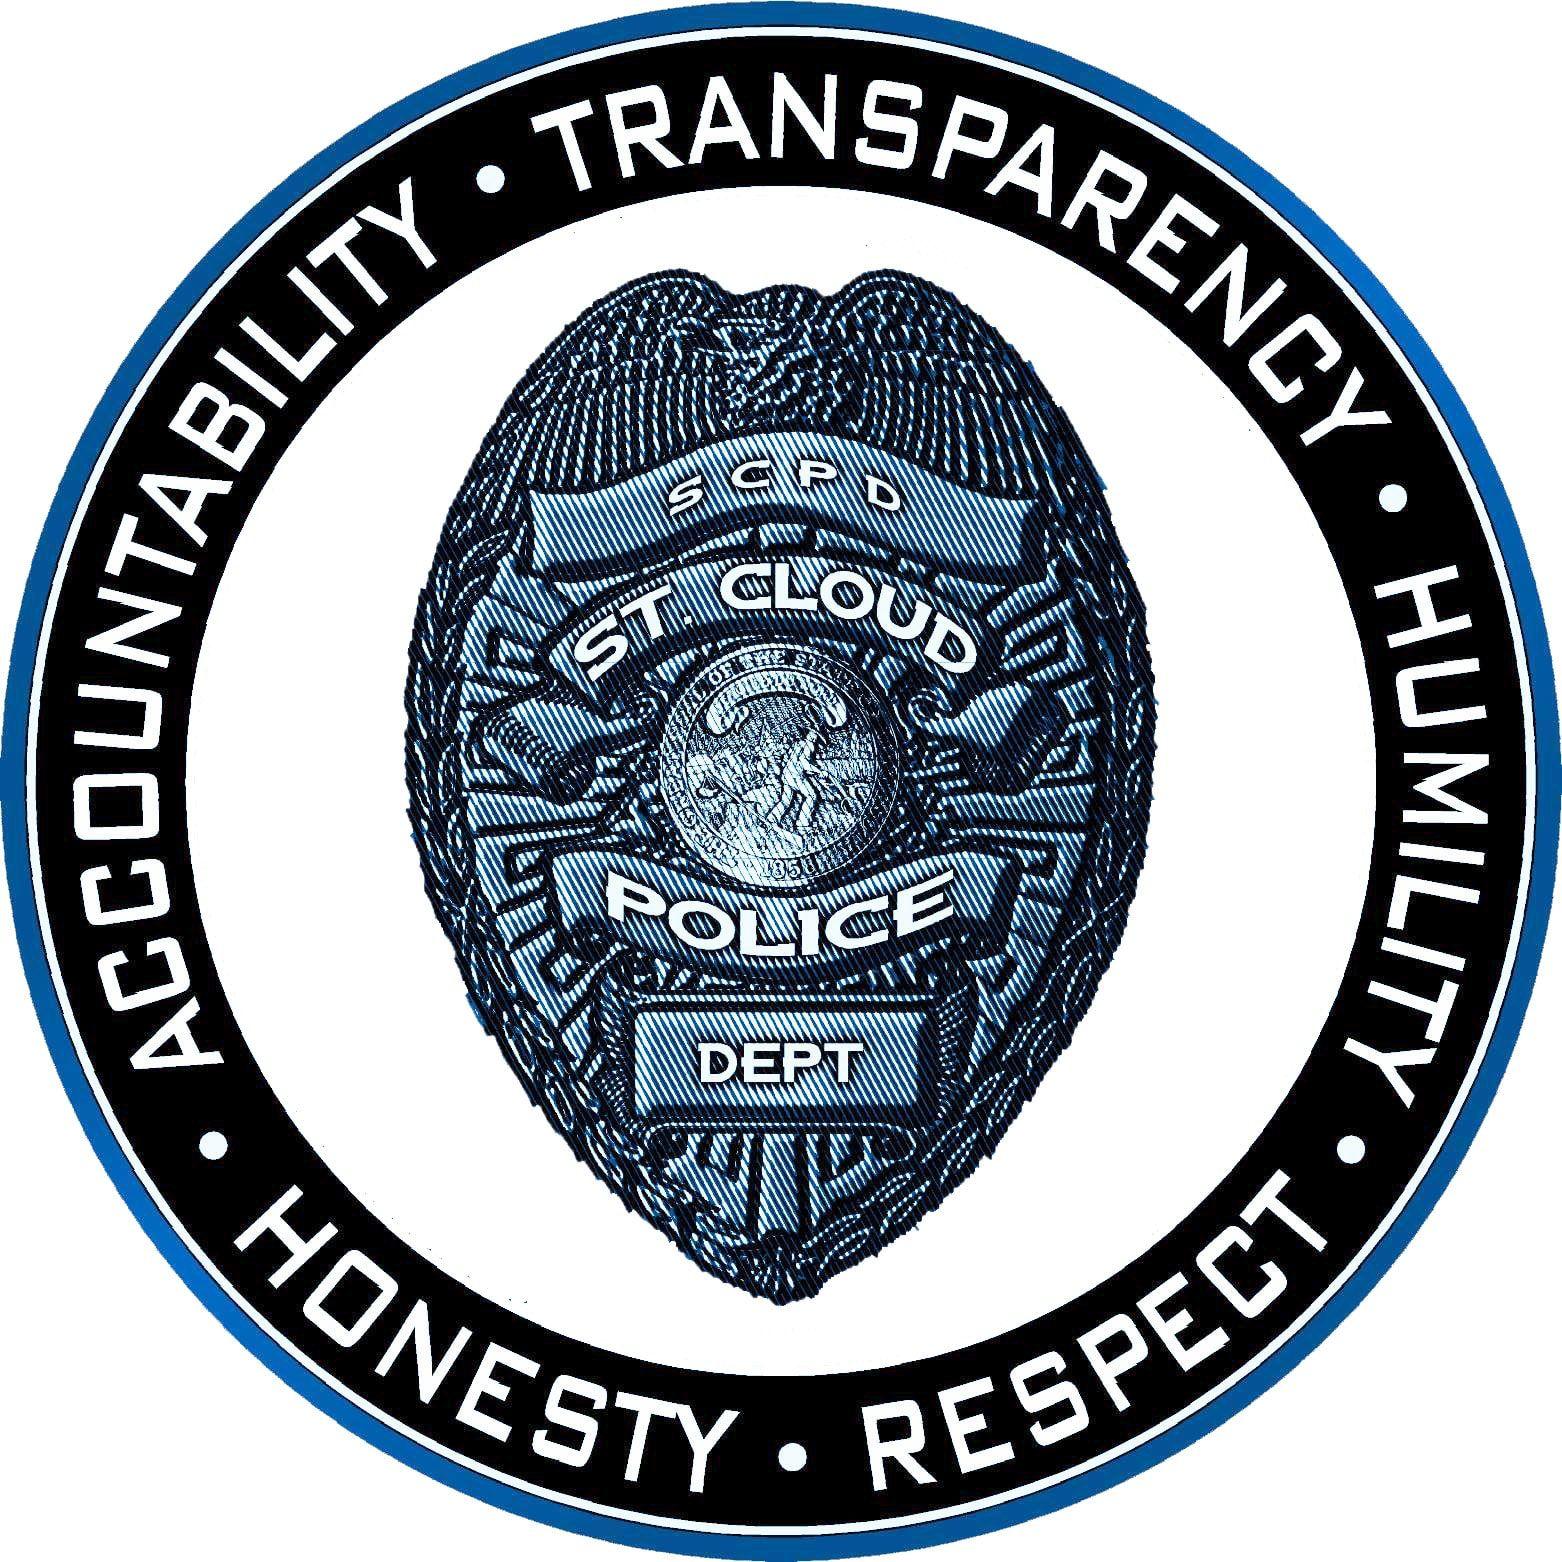 Integrity Logo - Wheel Of Integrity Logo The Legacy